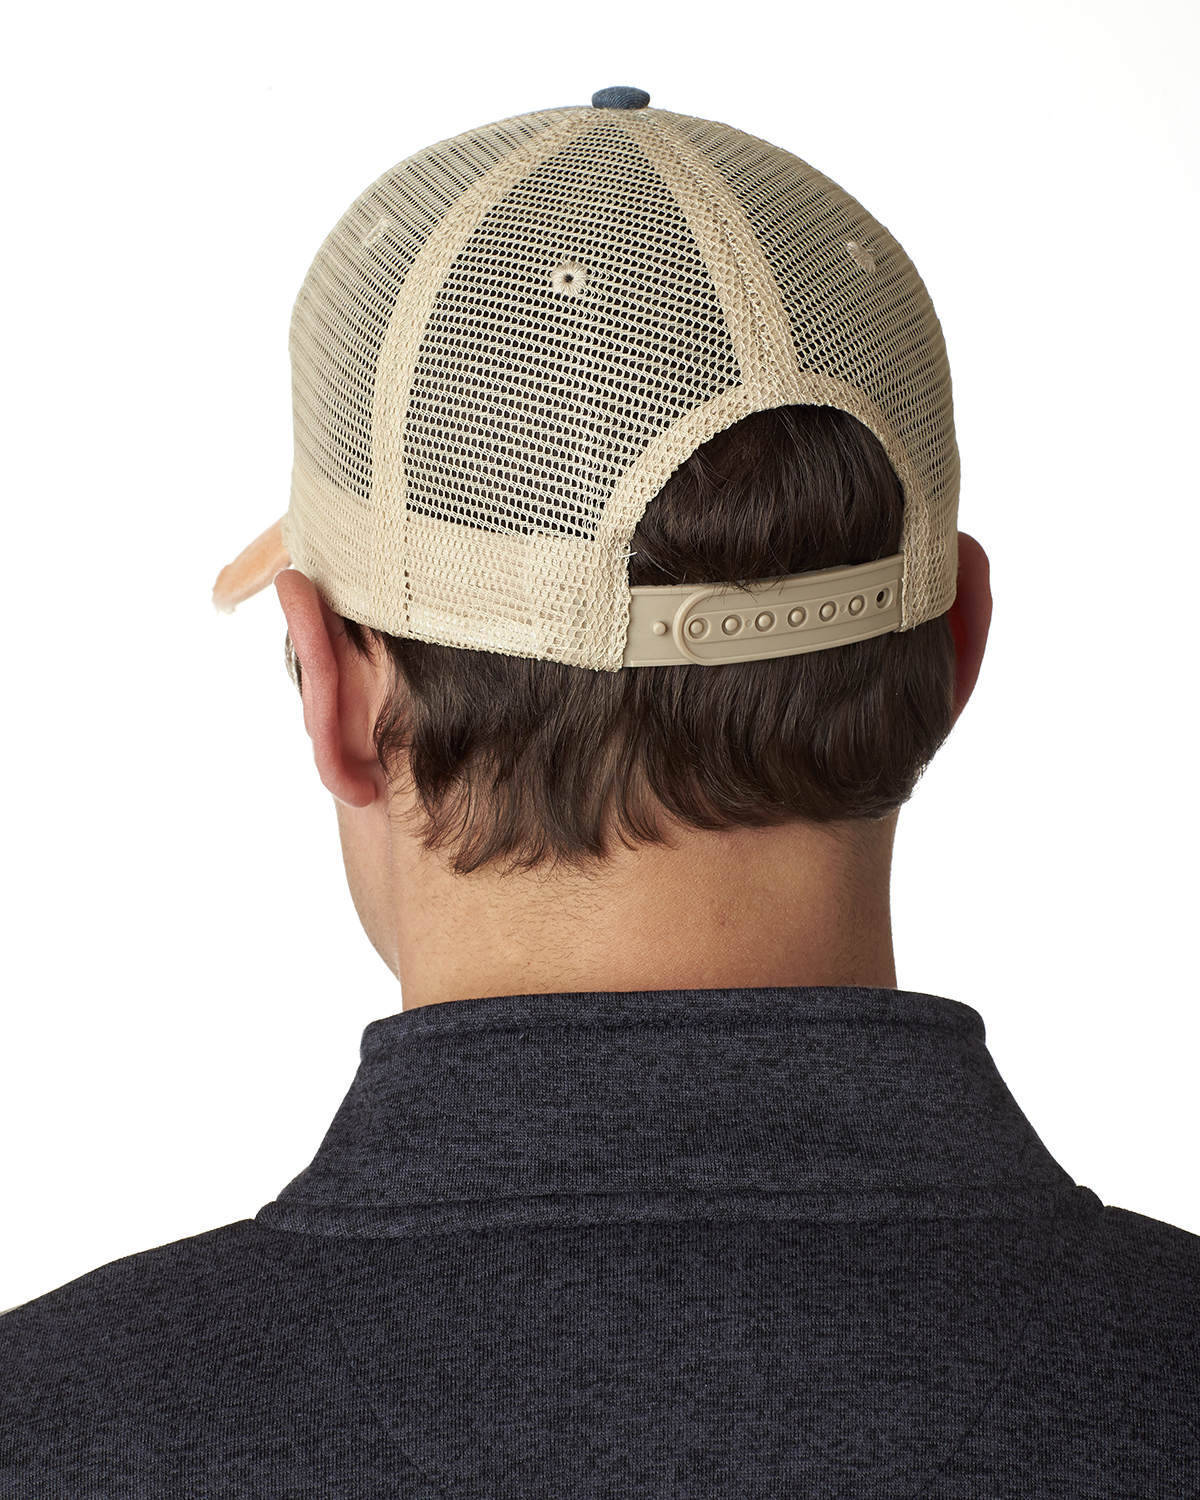 North Dakota Hat - Distressed Snapback Trucker Hat - North Dakota State Outline - Many Colors Available